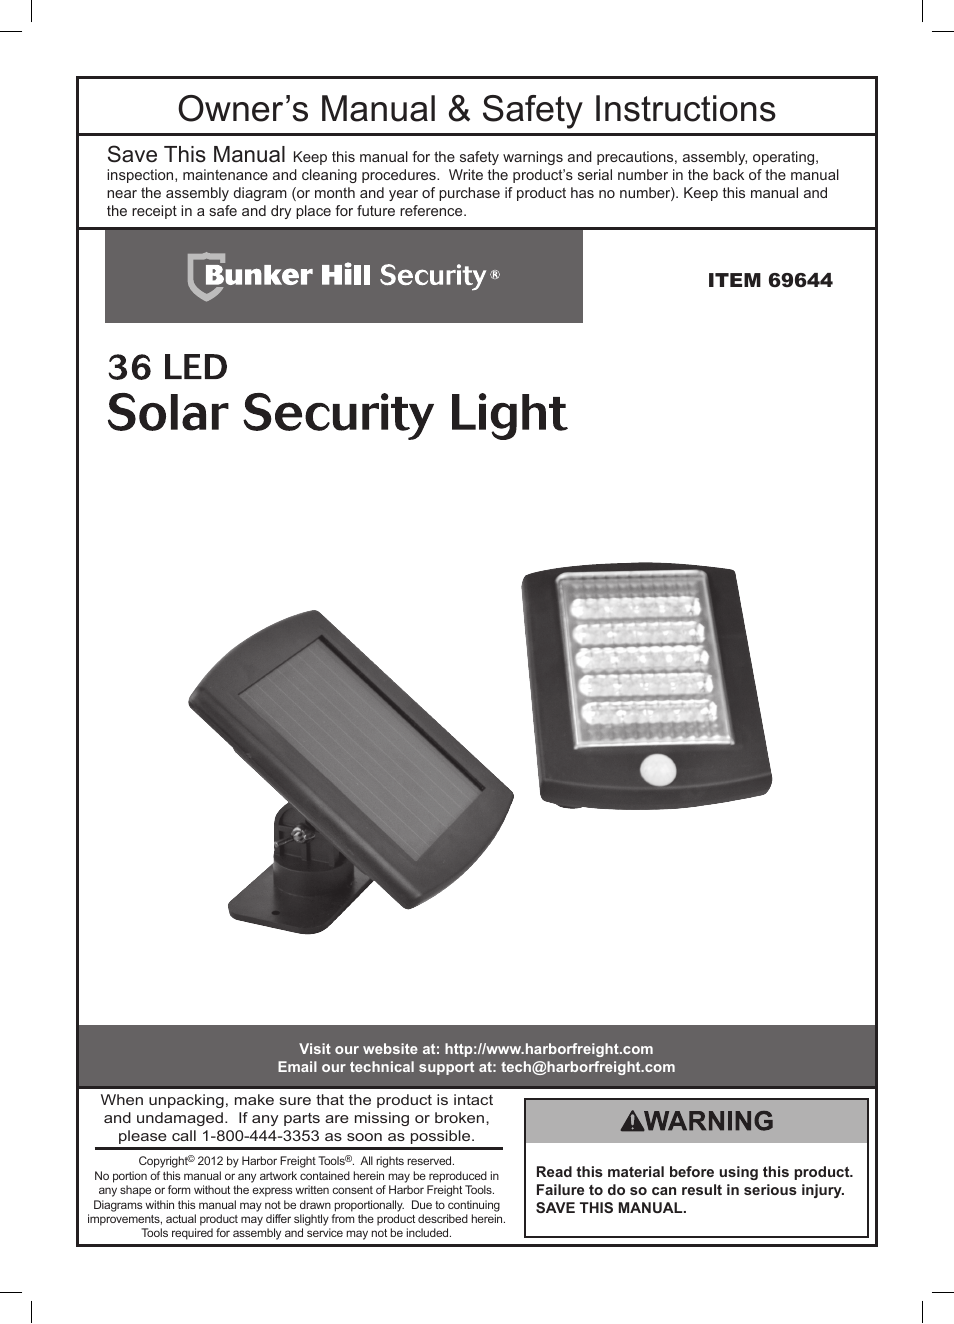 Solar Security Light 36